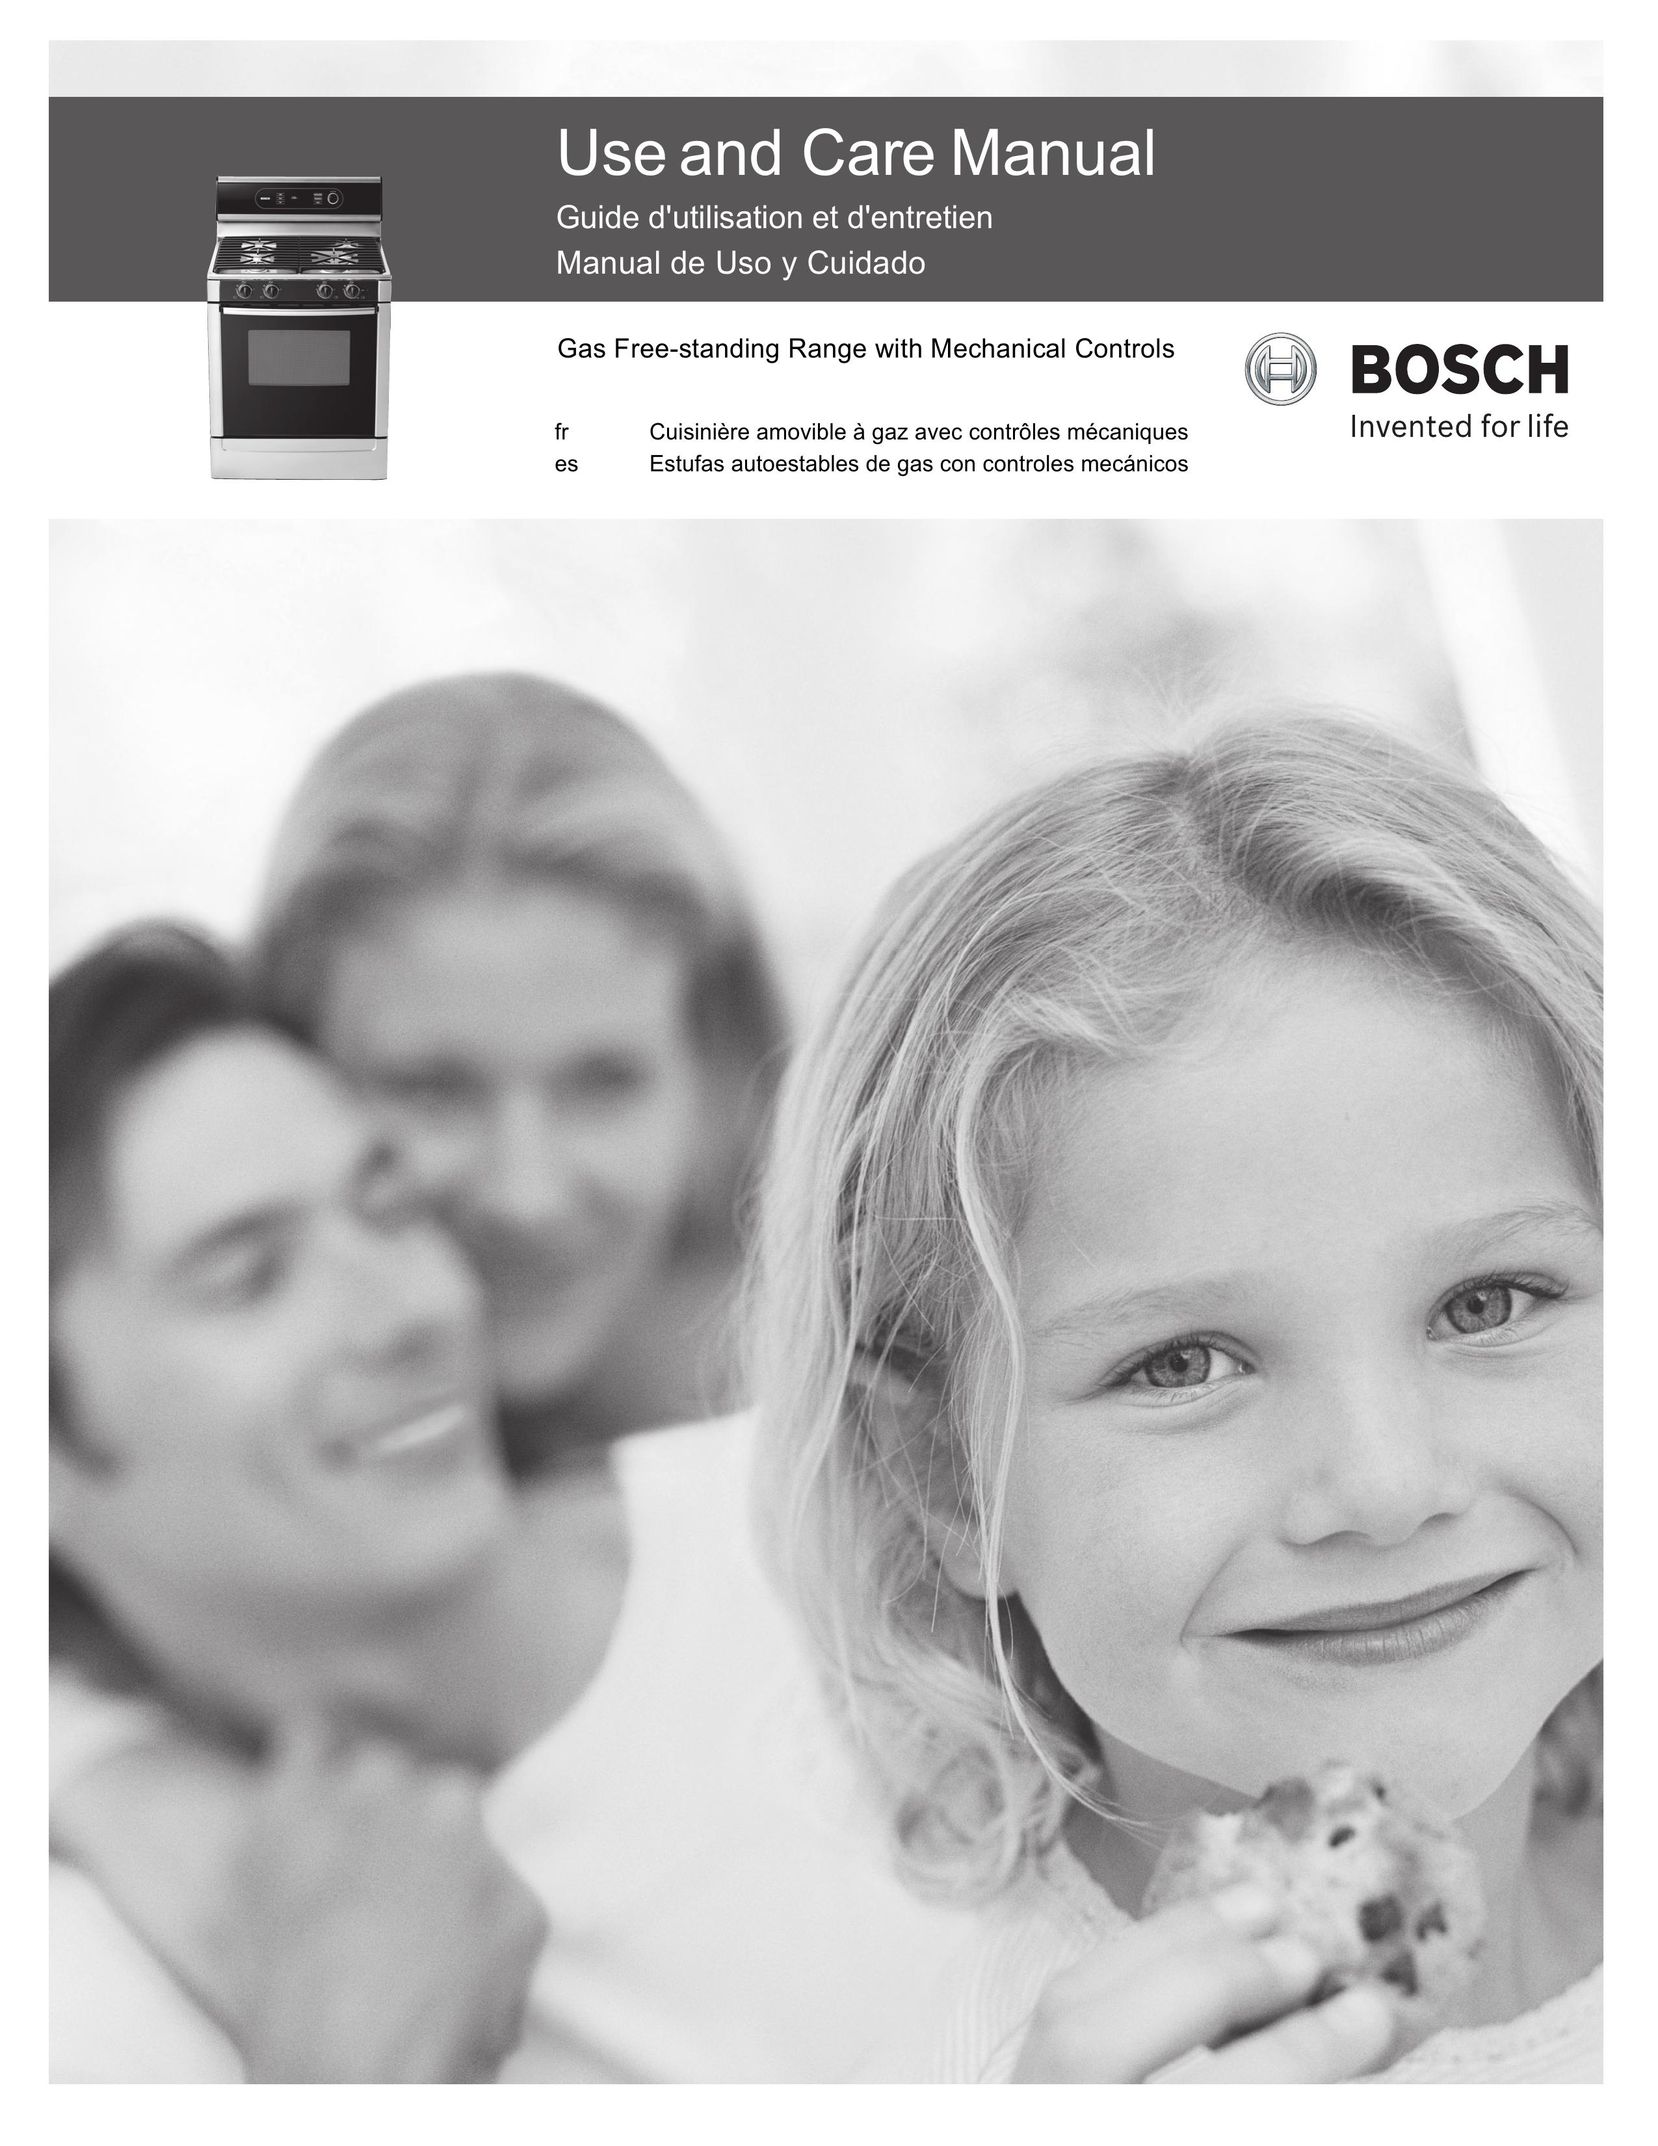 Bosch Appliances Gas free-standing Range with Mechanical controls Range User Manual